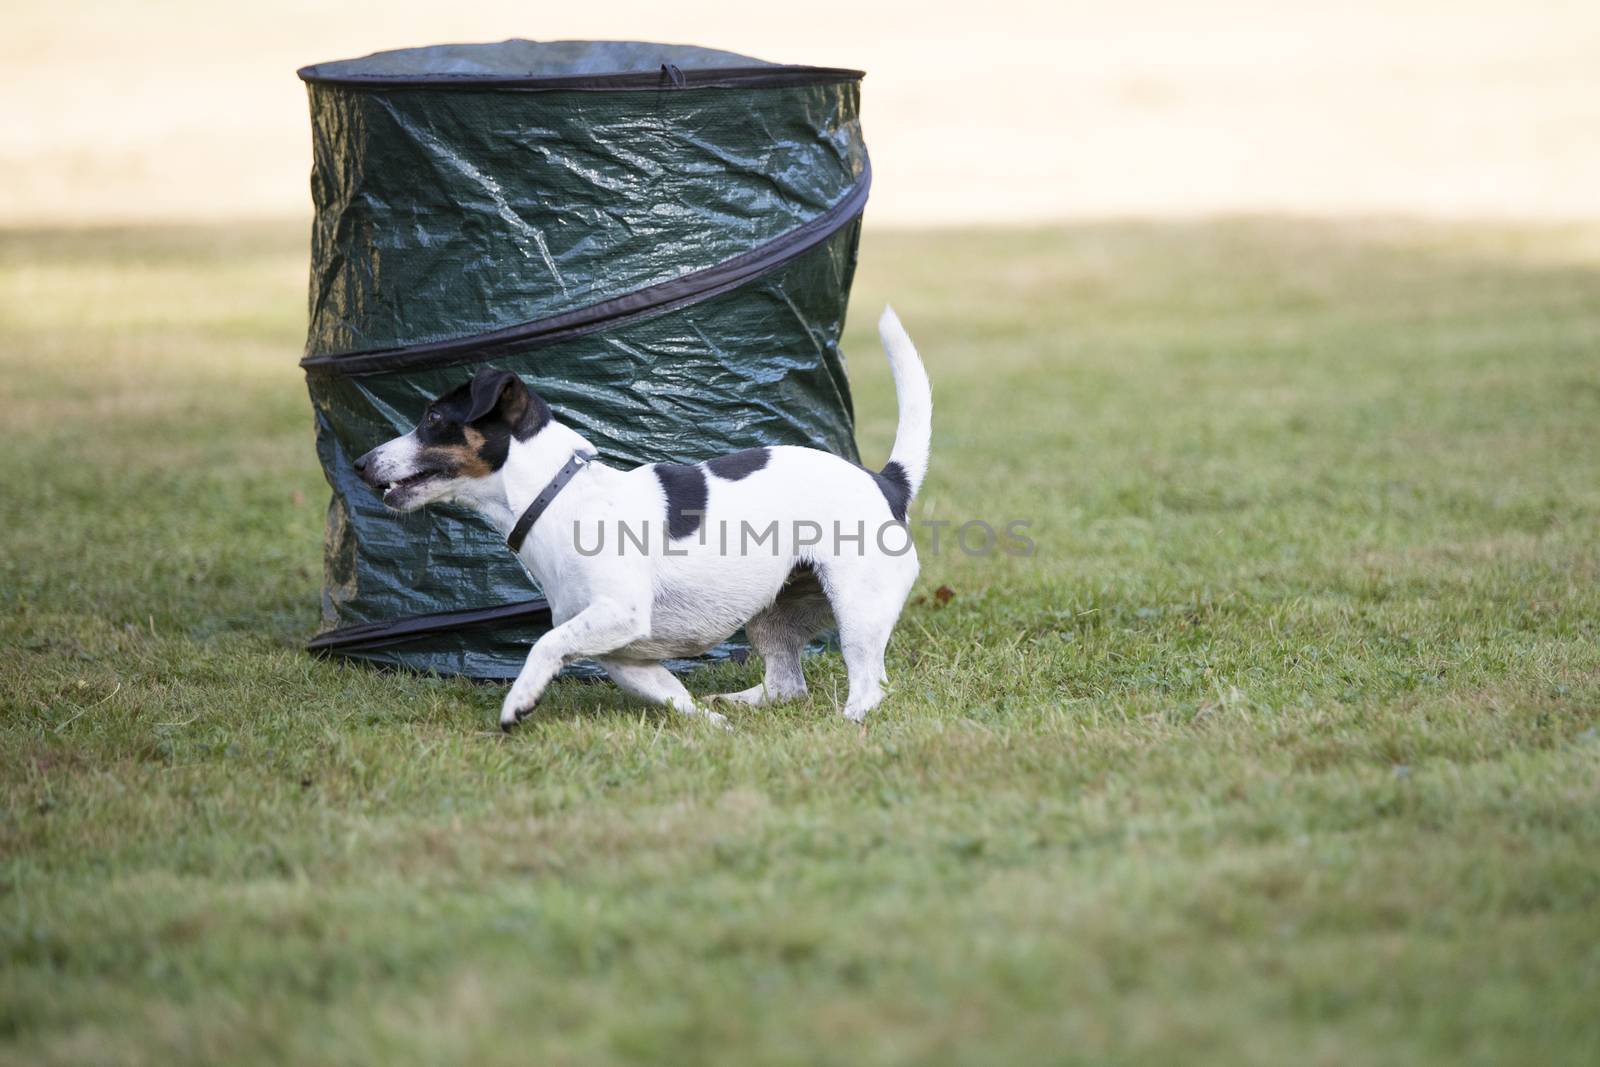 Jack Russell Terrier running